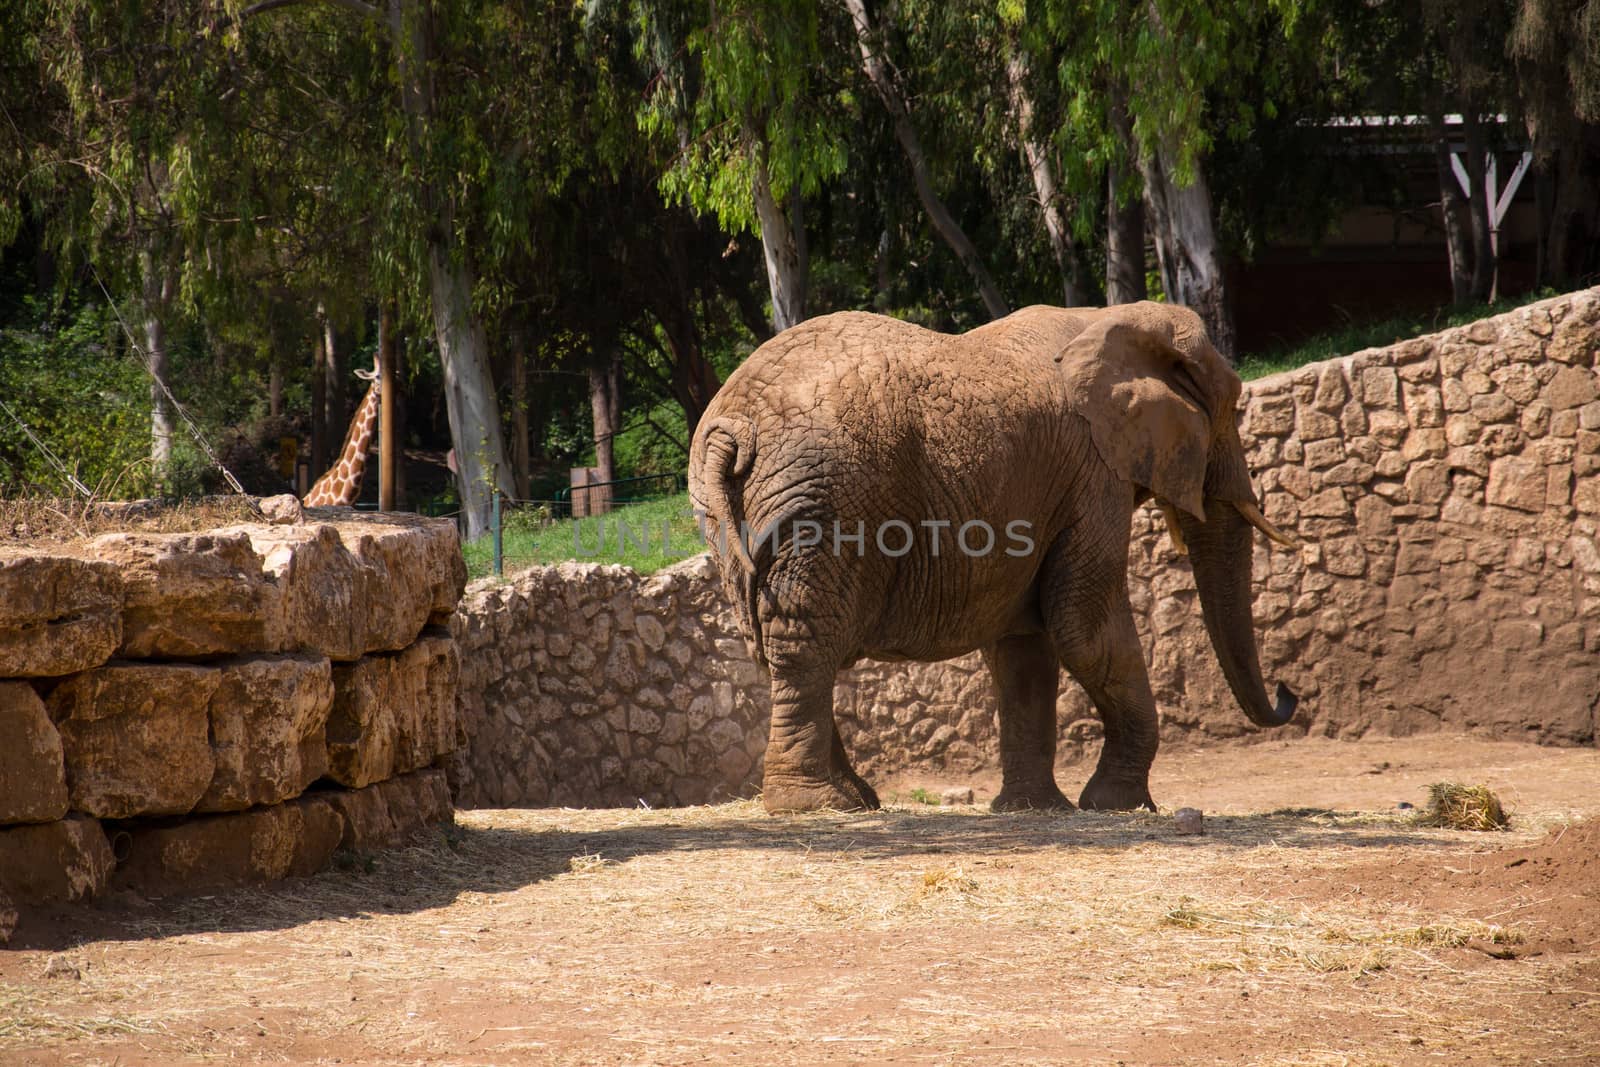 A male elephant walking calmly in the zoo